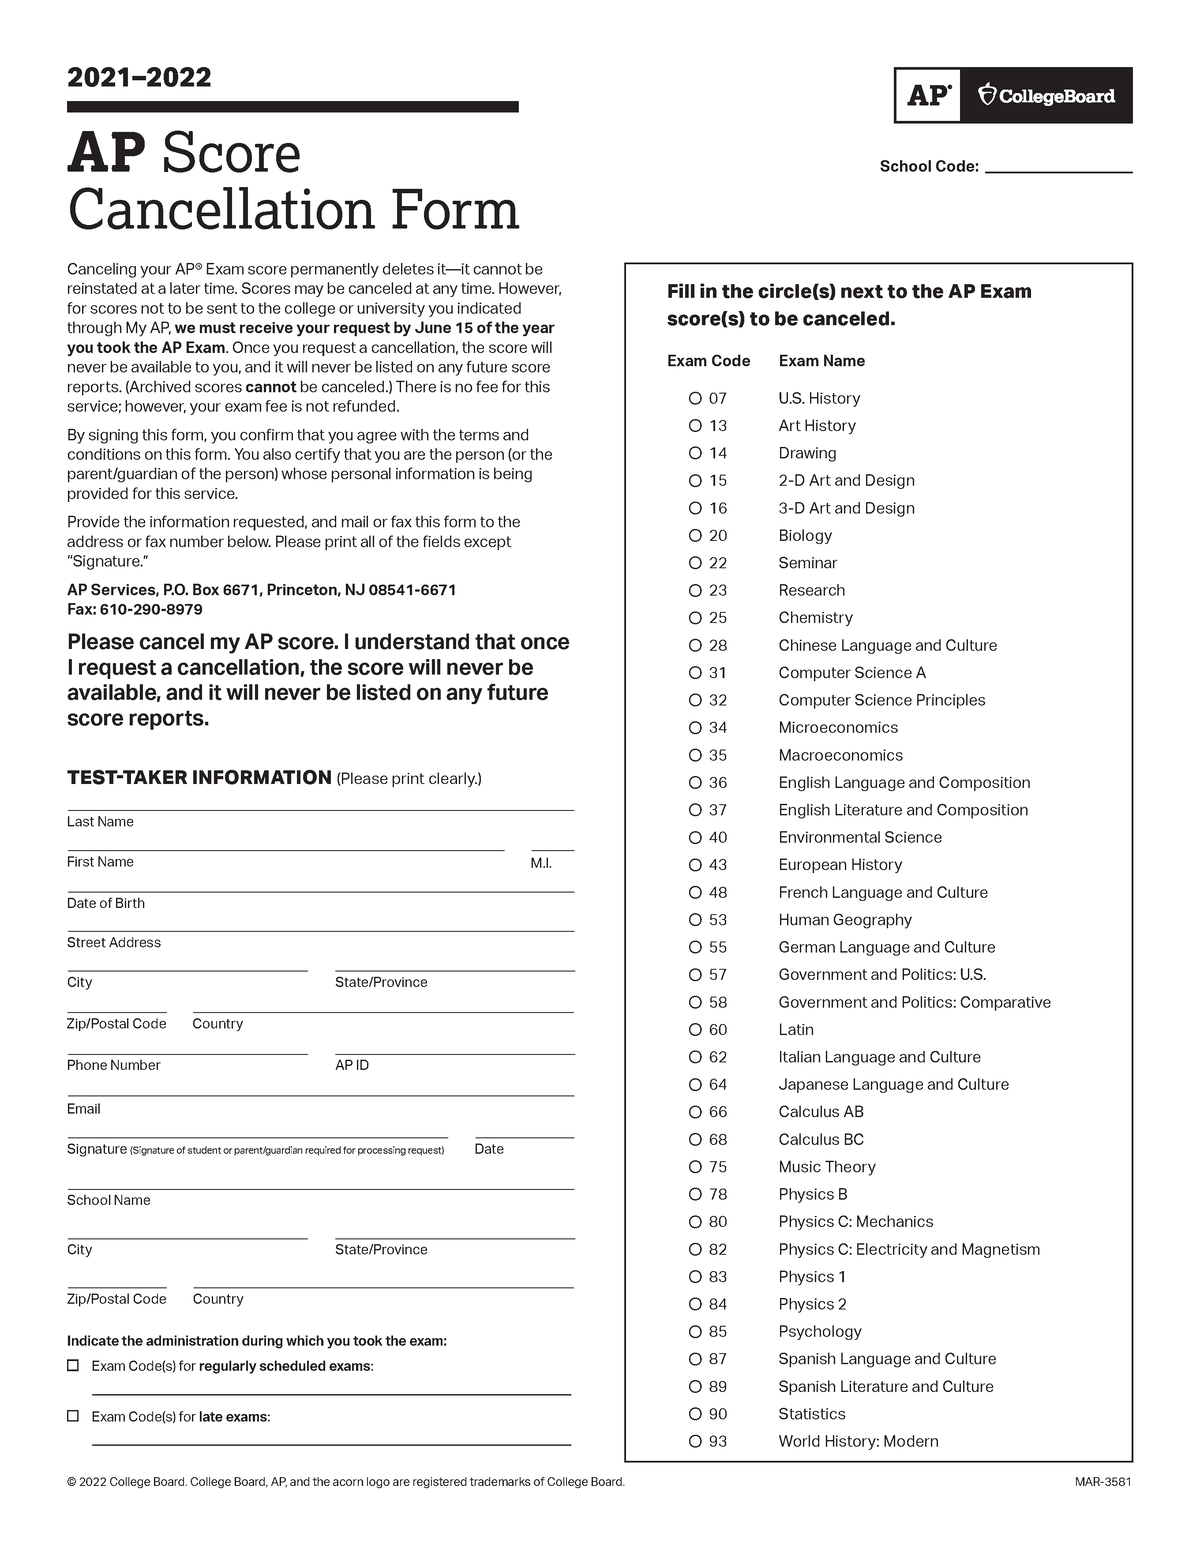 Ap Score Cancellation Form 2021 AP Score Cancellation Form School 